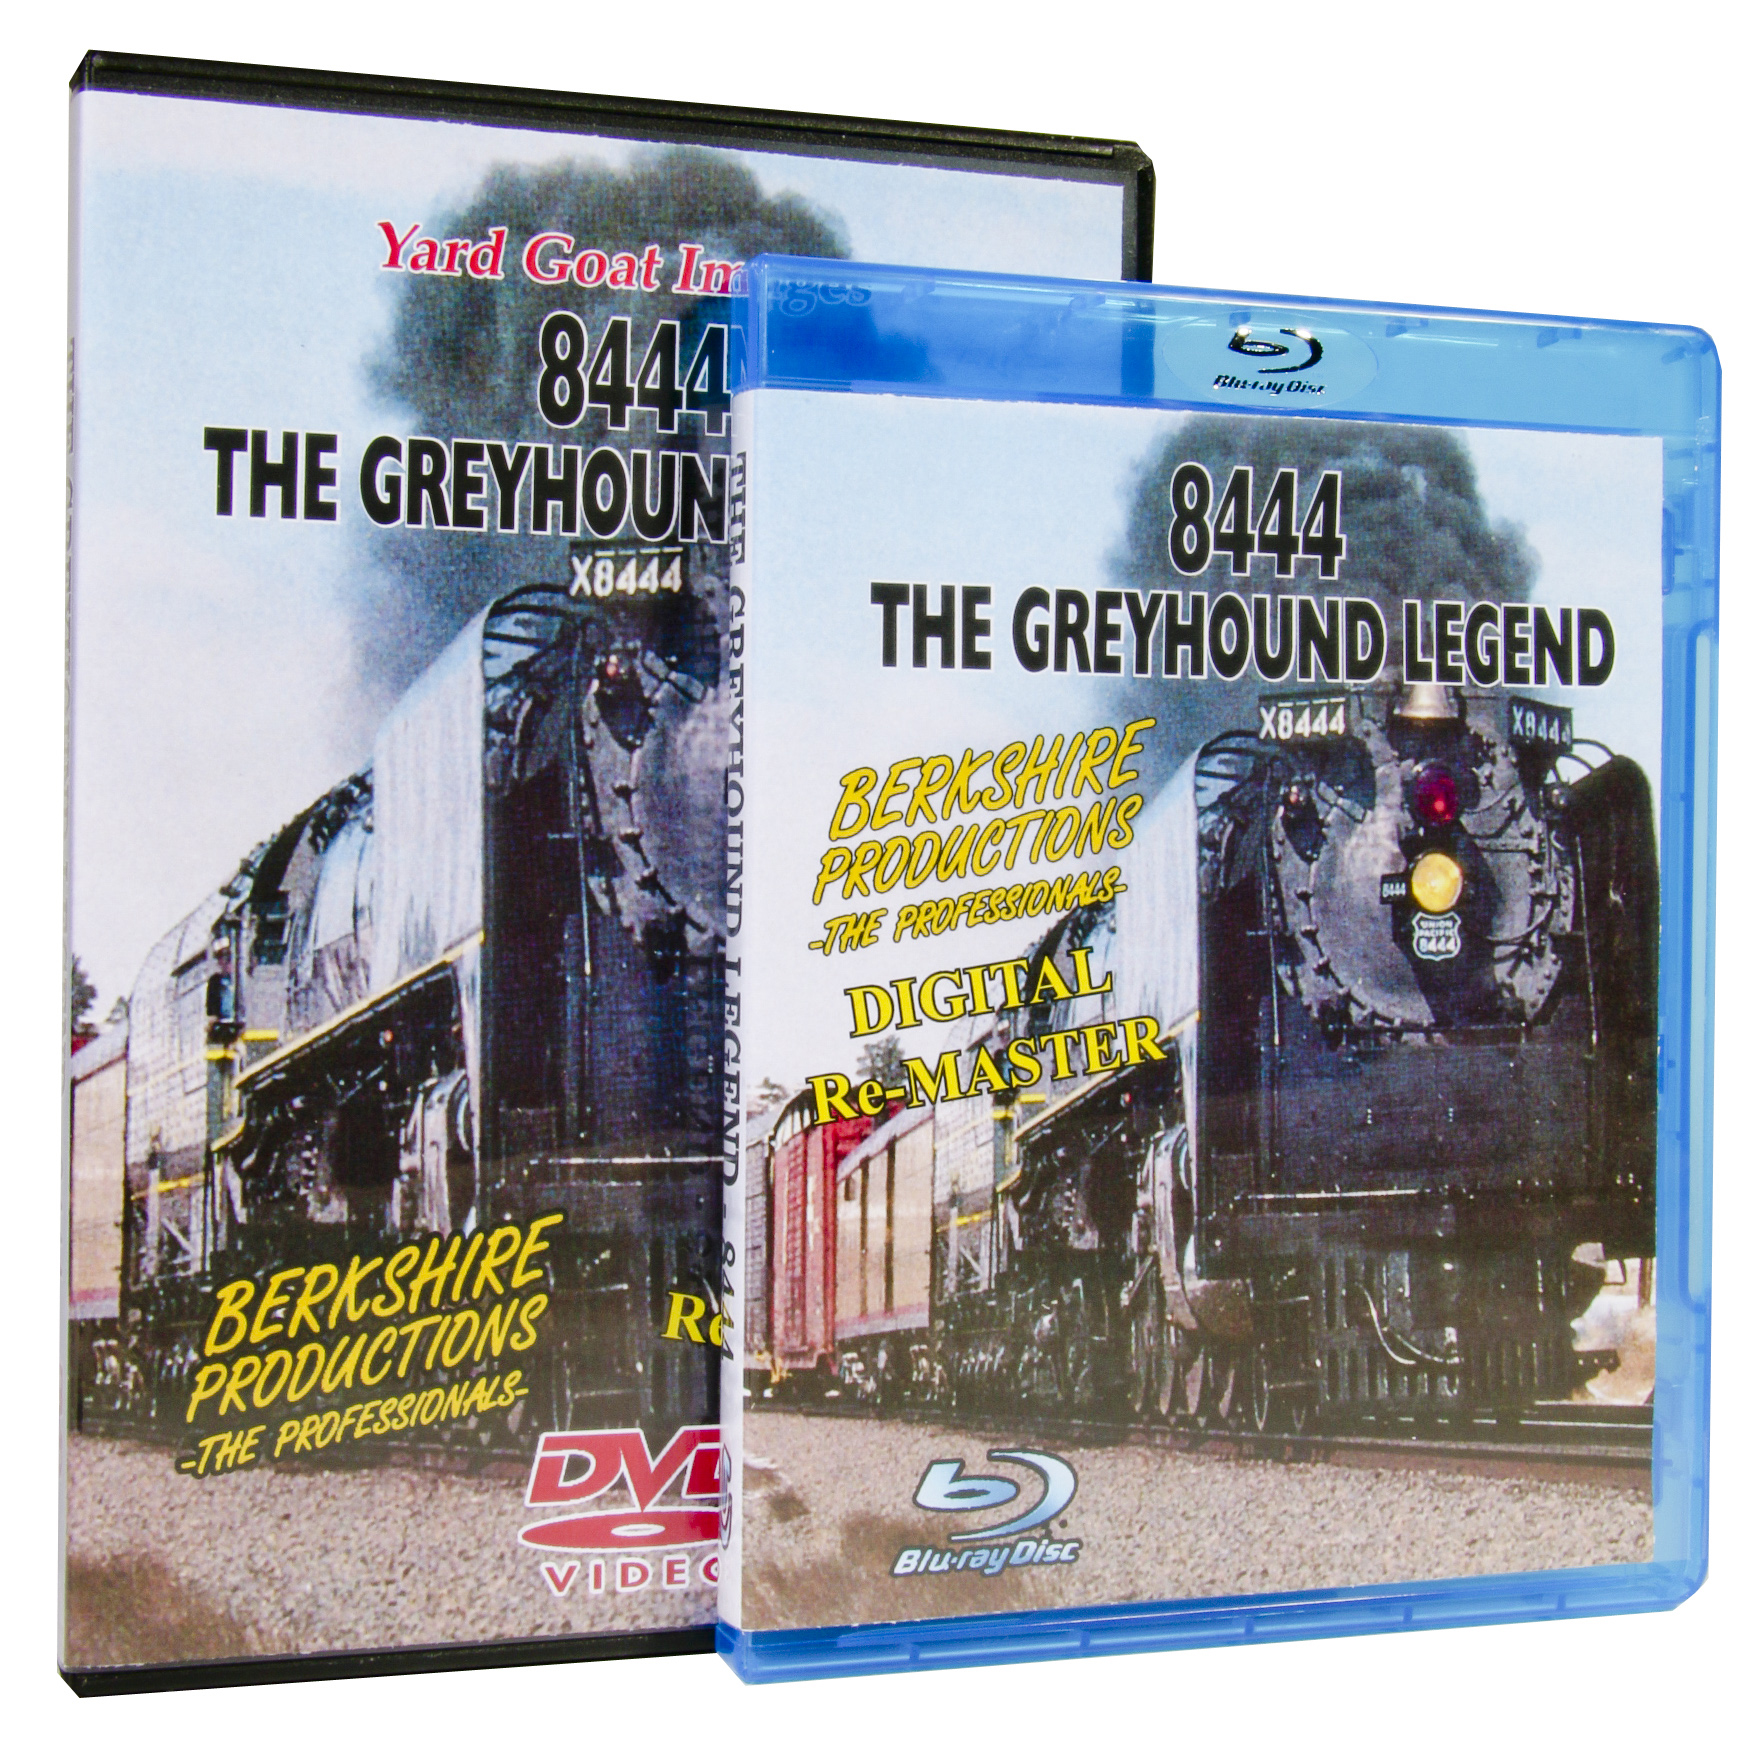 8444 The Greyhound Legend Union Pacific DVD Berkshire Production Videos BERK-844D